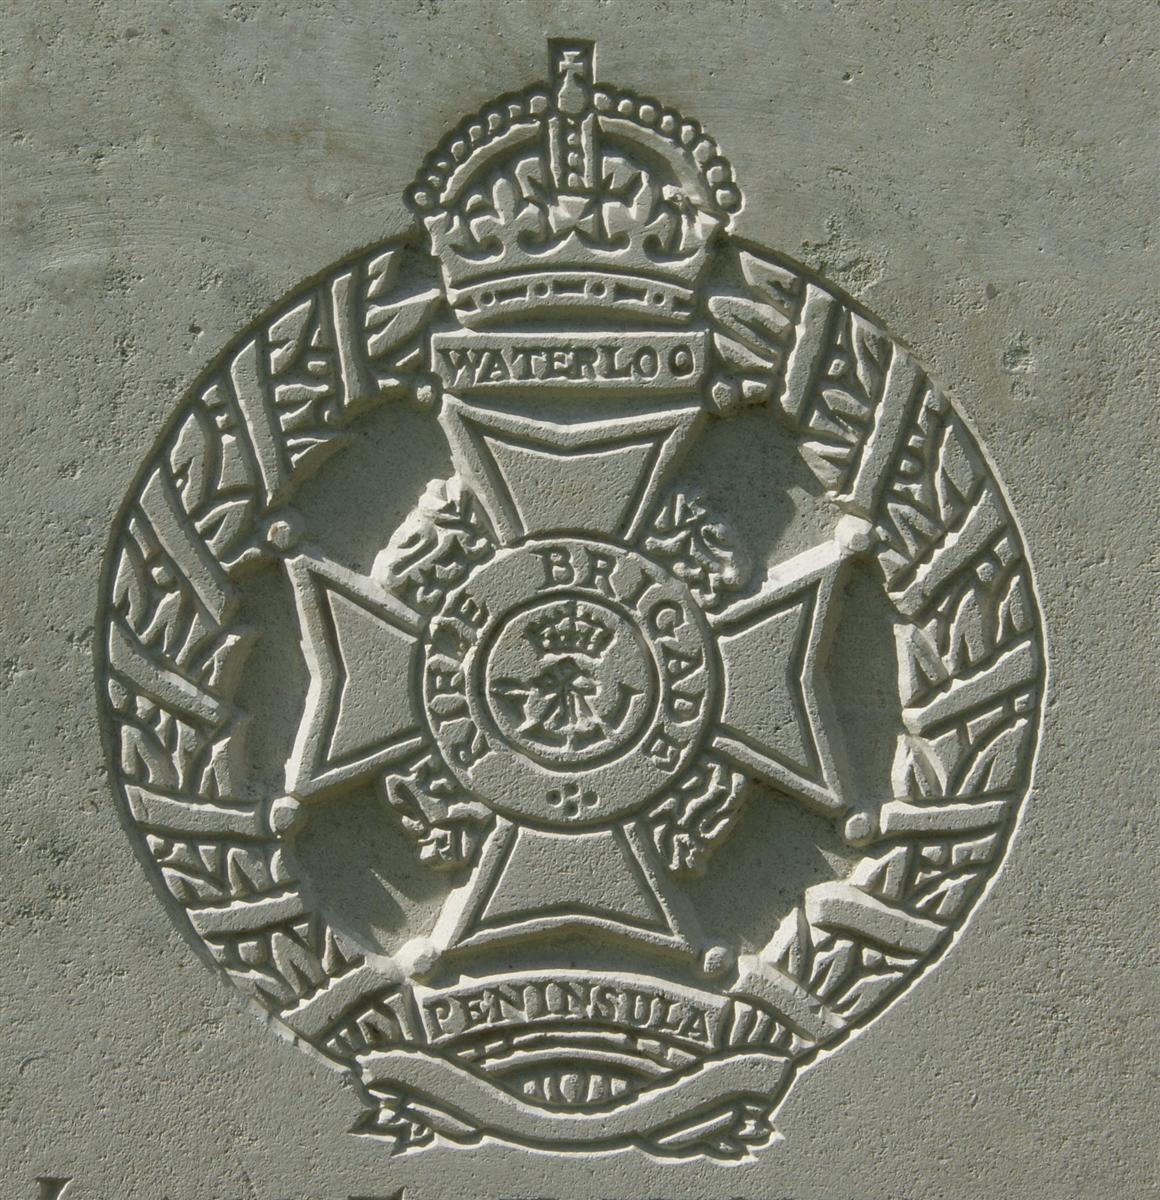 Rifle Brigade badge